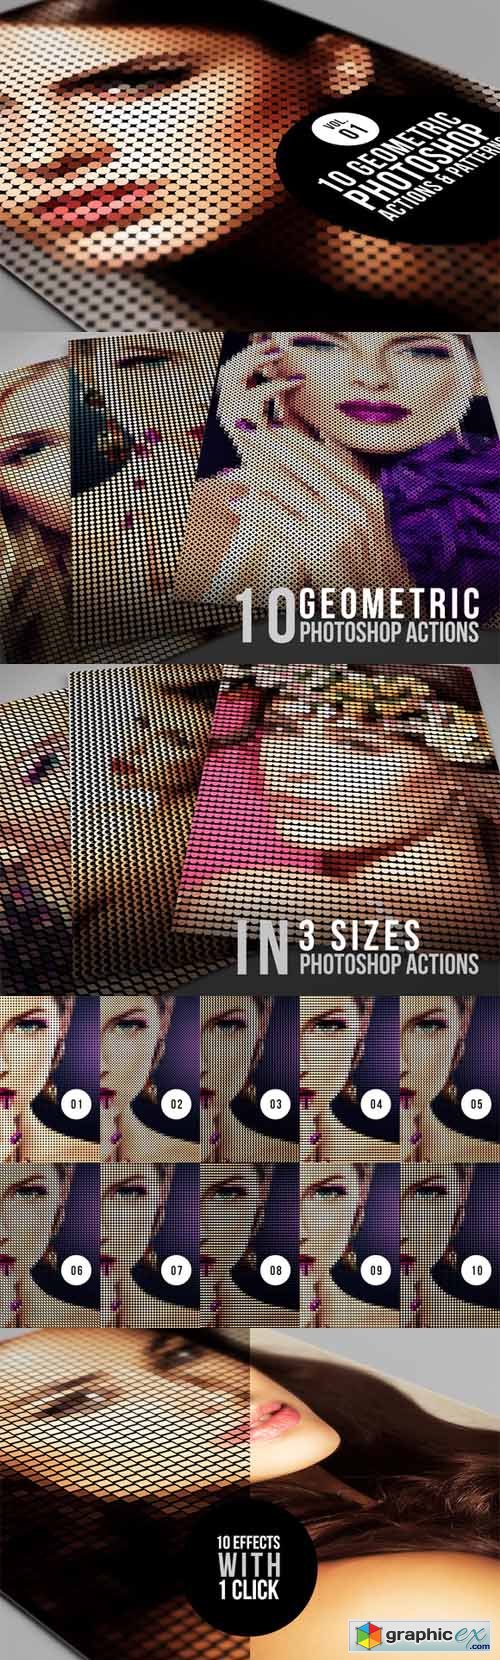 10 Geometric Photoshop Actions 01